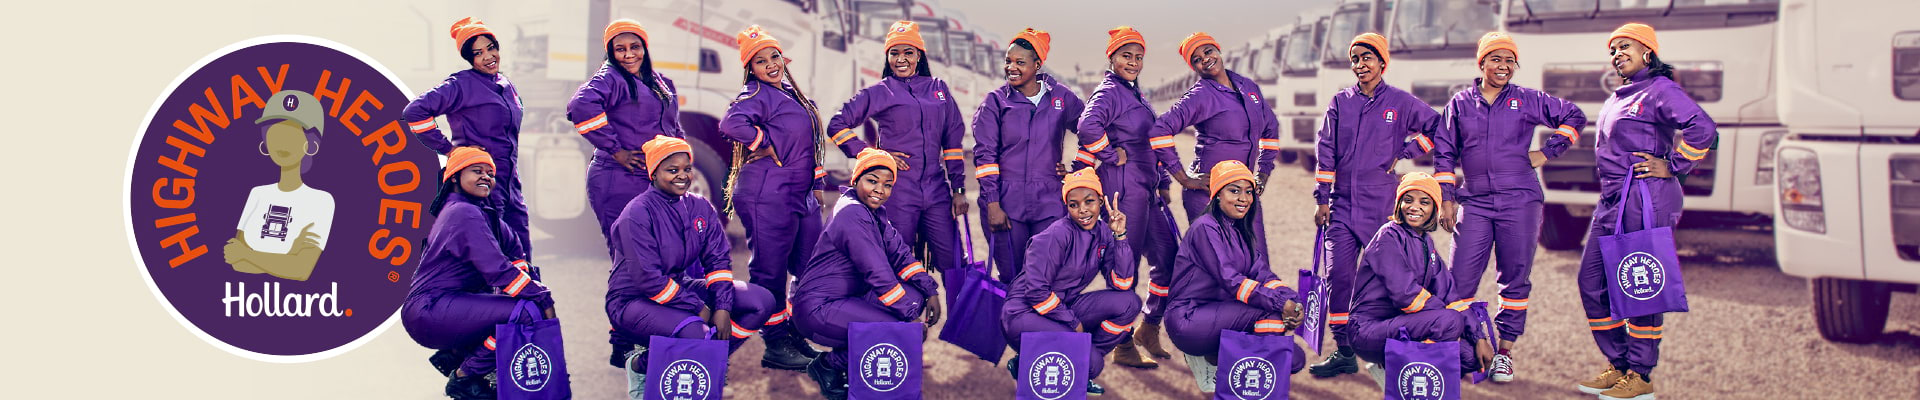 Hollard Highway Heroes Women In Transport group in purple overalls by trucks